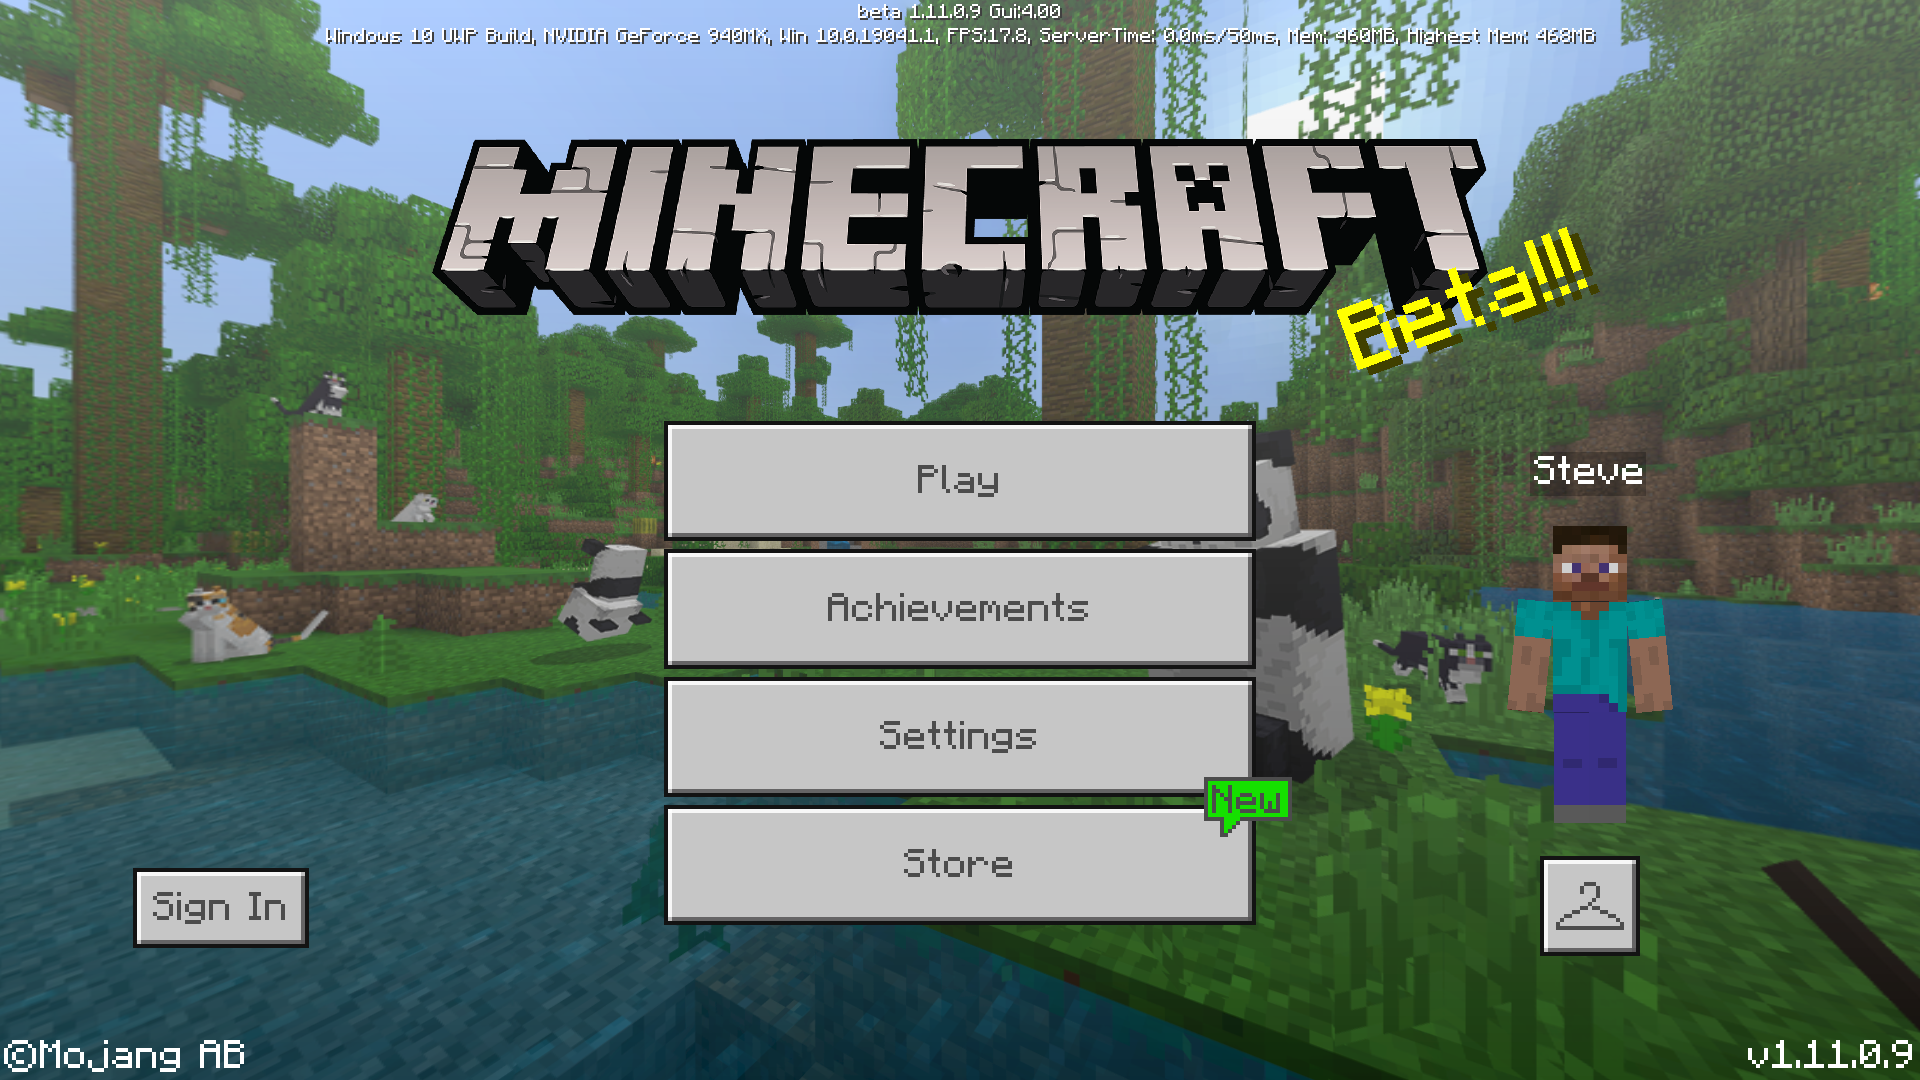 Minecraft grátis na Play Store somente hoje (10) e amanhã 